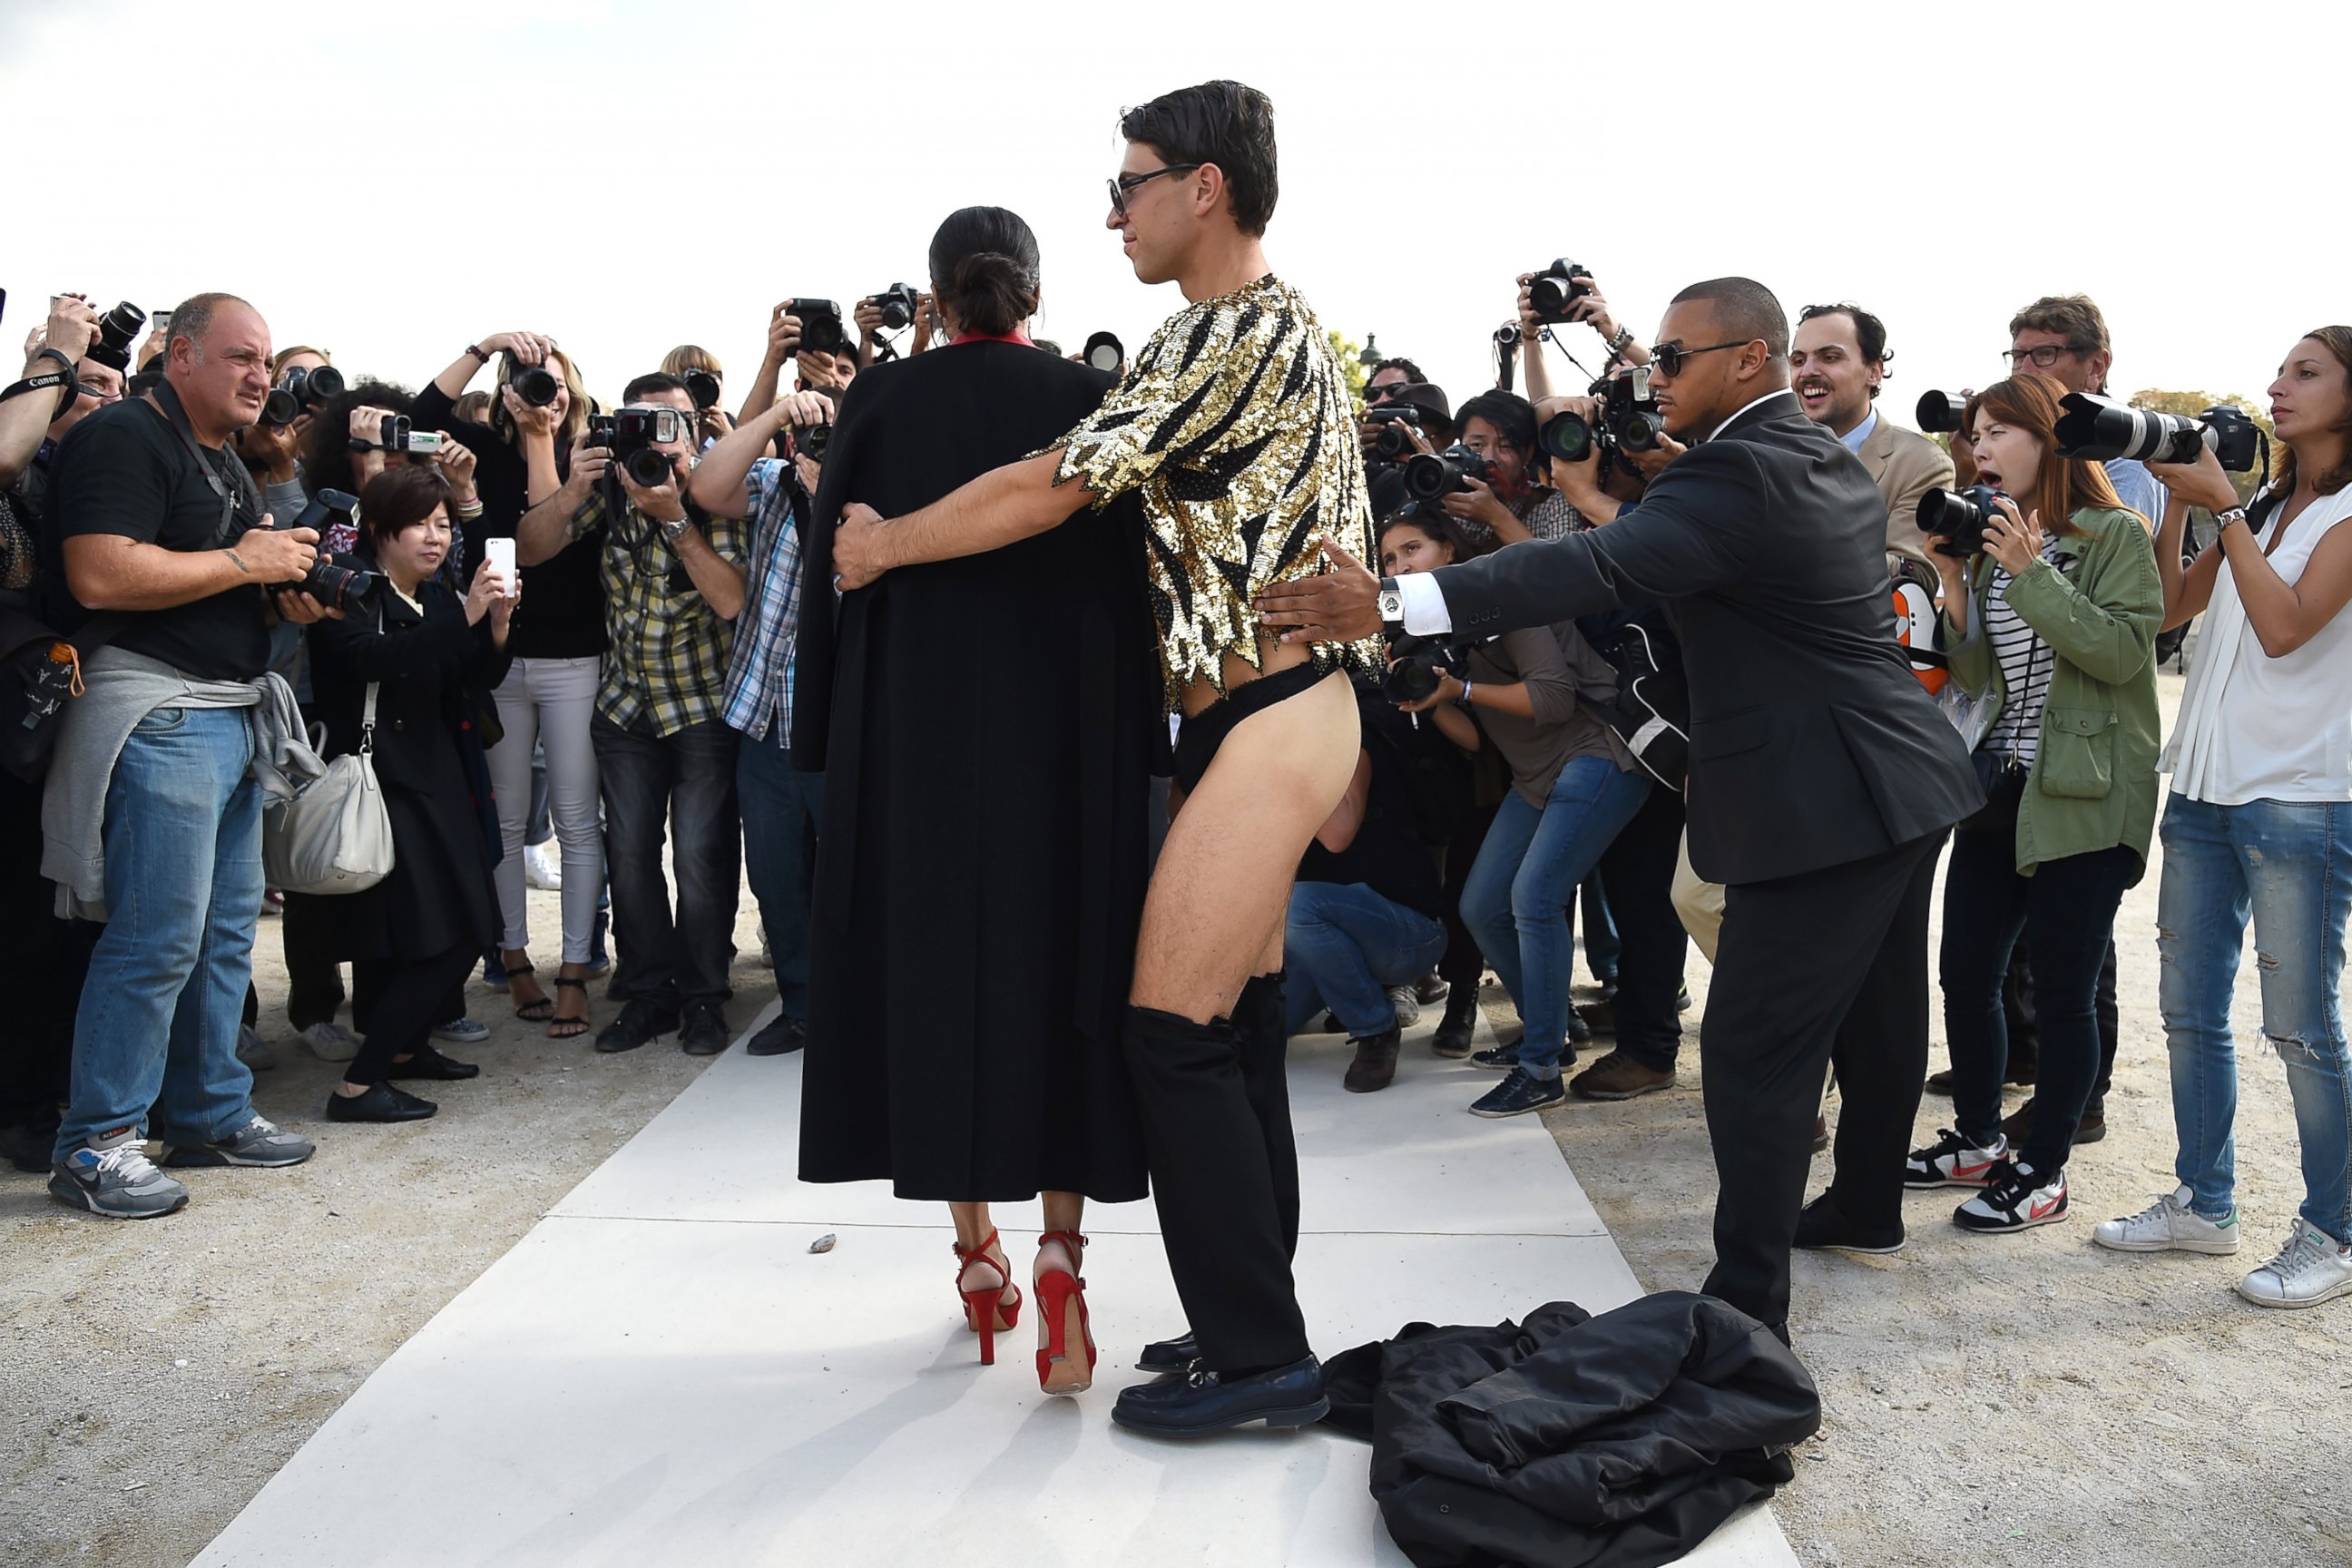 PHOTO: Ukrainian journalist/prankster Vitalii Sediuk targets Singer Ciara with his latest celebrity prank as she arrives at Valentino Fashion Show during Paris Fashion Week, Womenswear SS 2015, Sept. 30, 2014 in Paris.